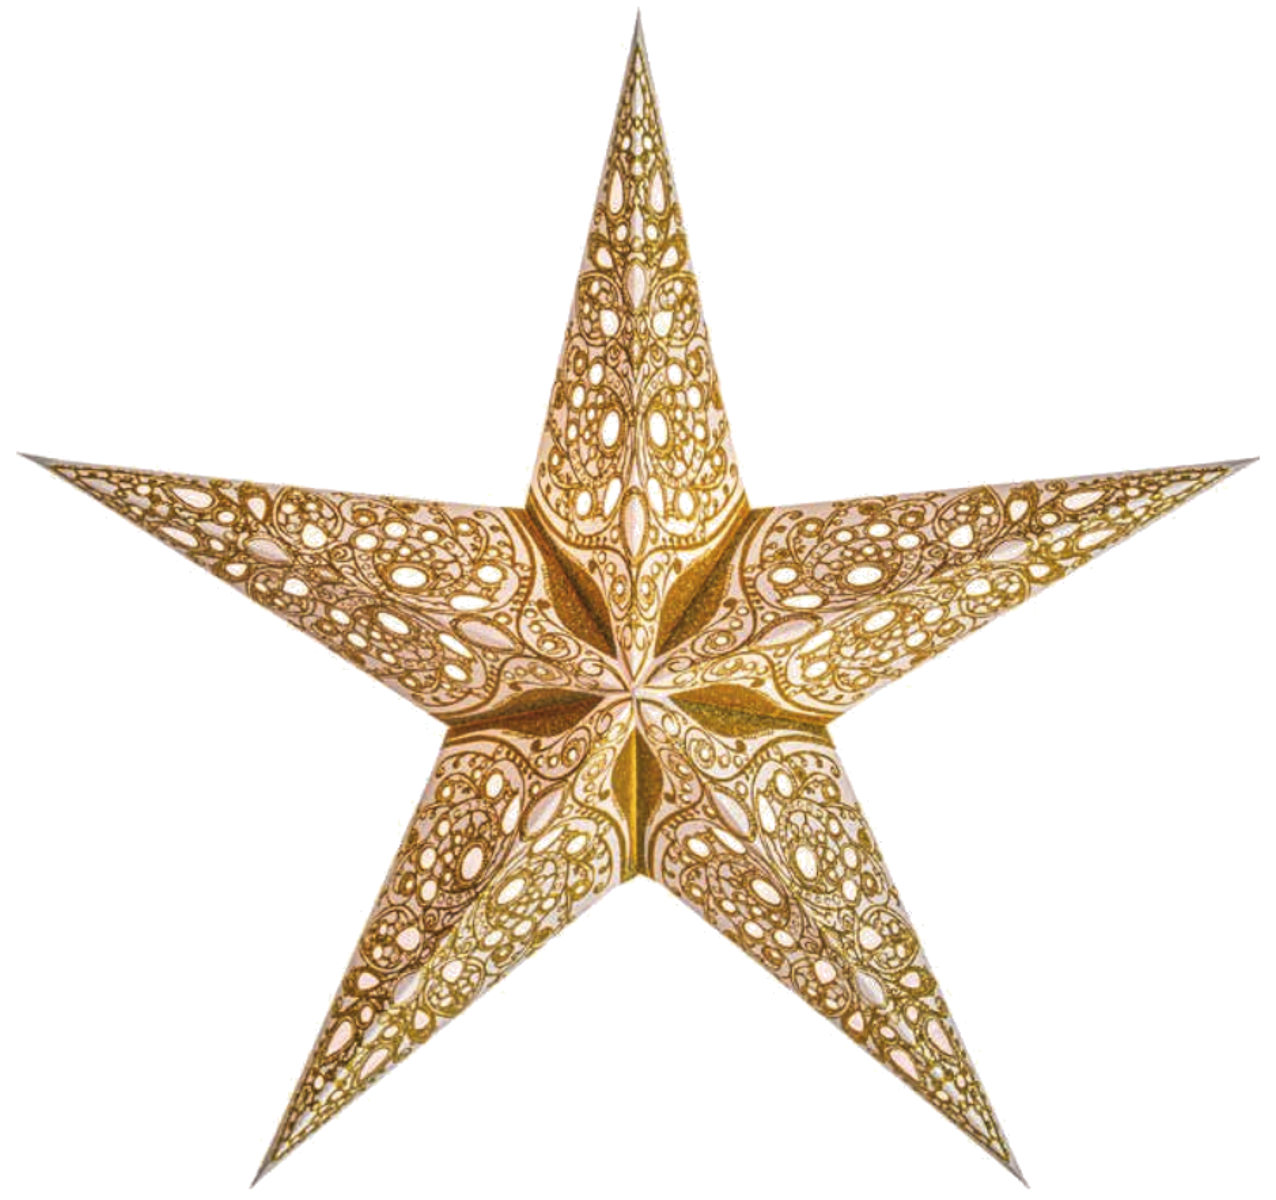 Bild für Kategorie starlightz raja